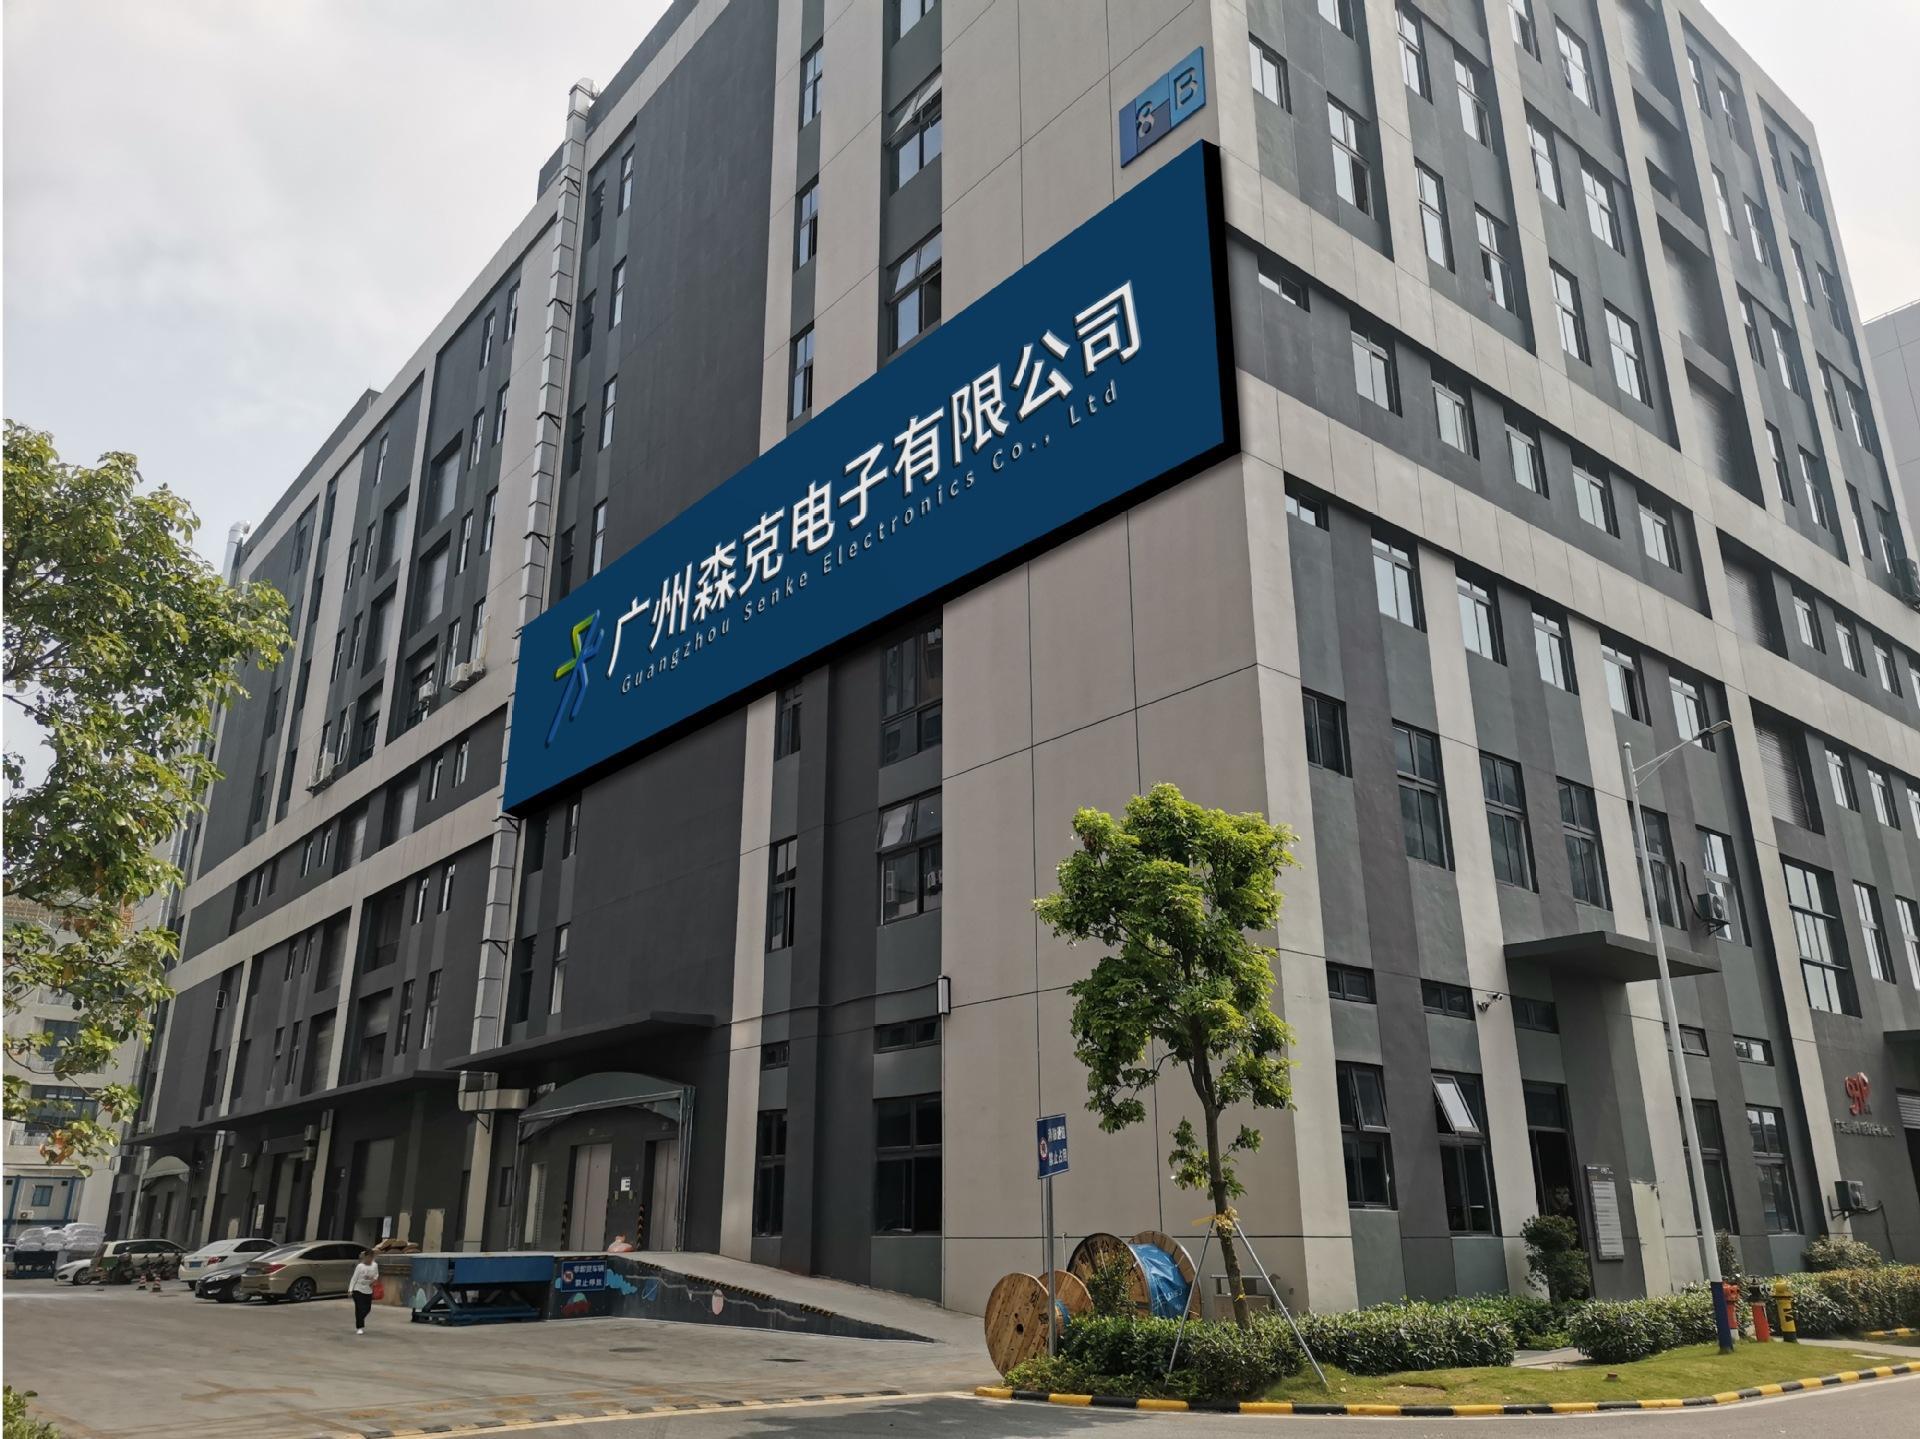   Guangzhou Senke Electronics Co., Ltd